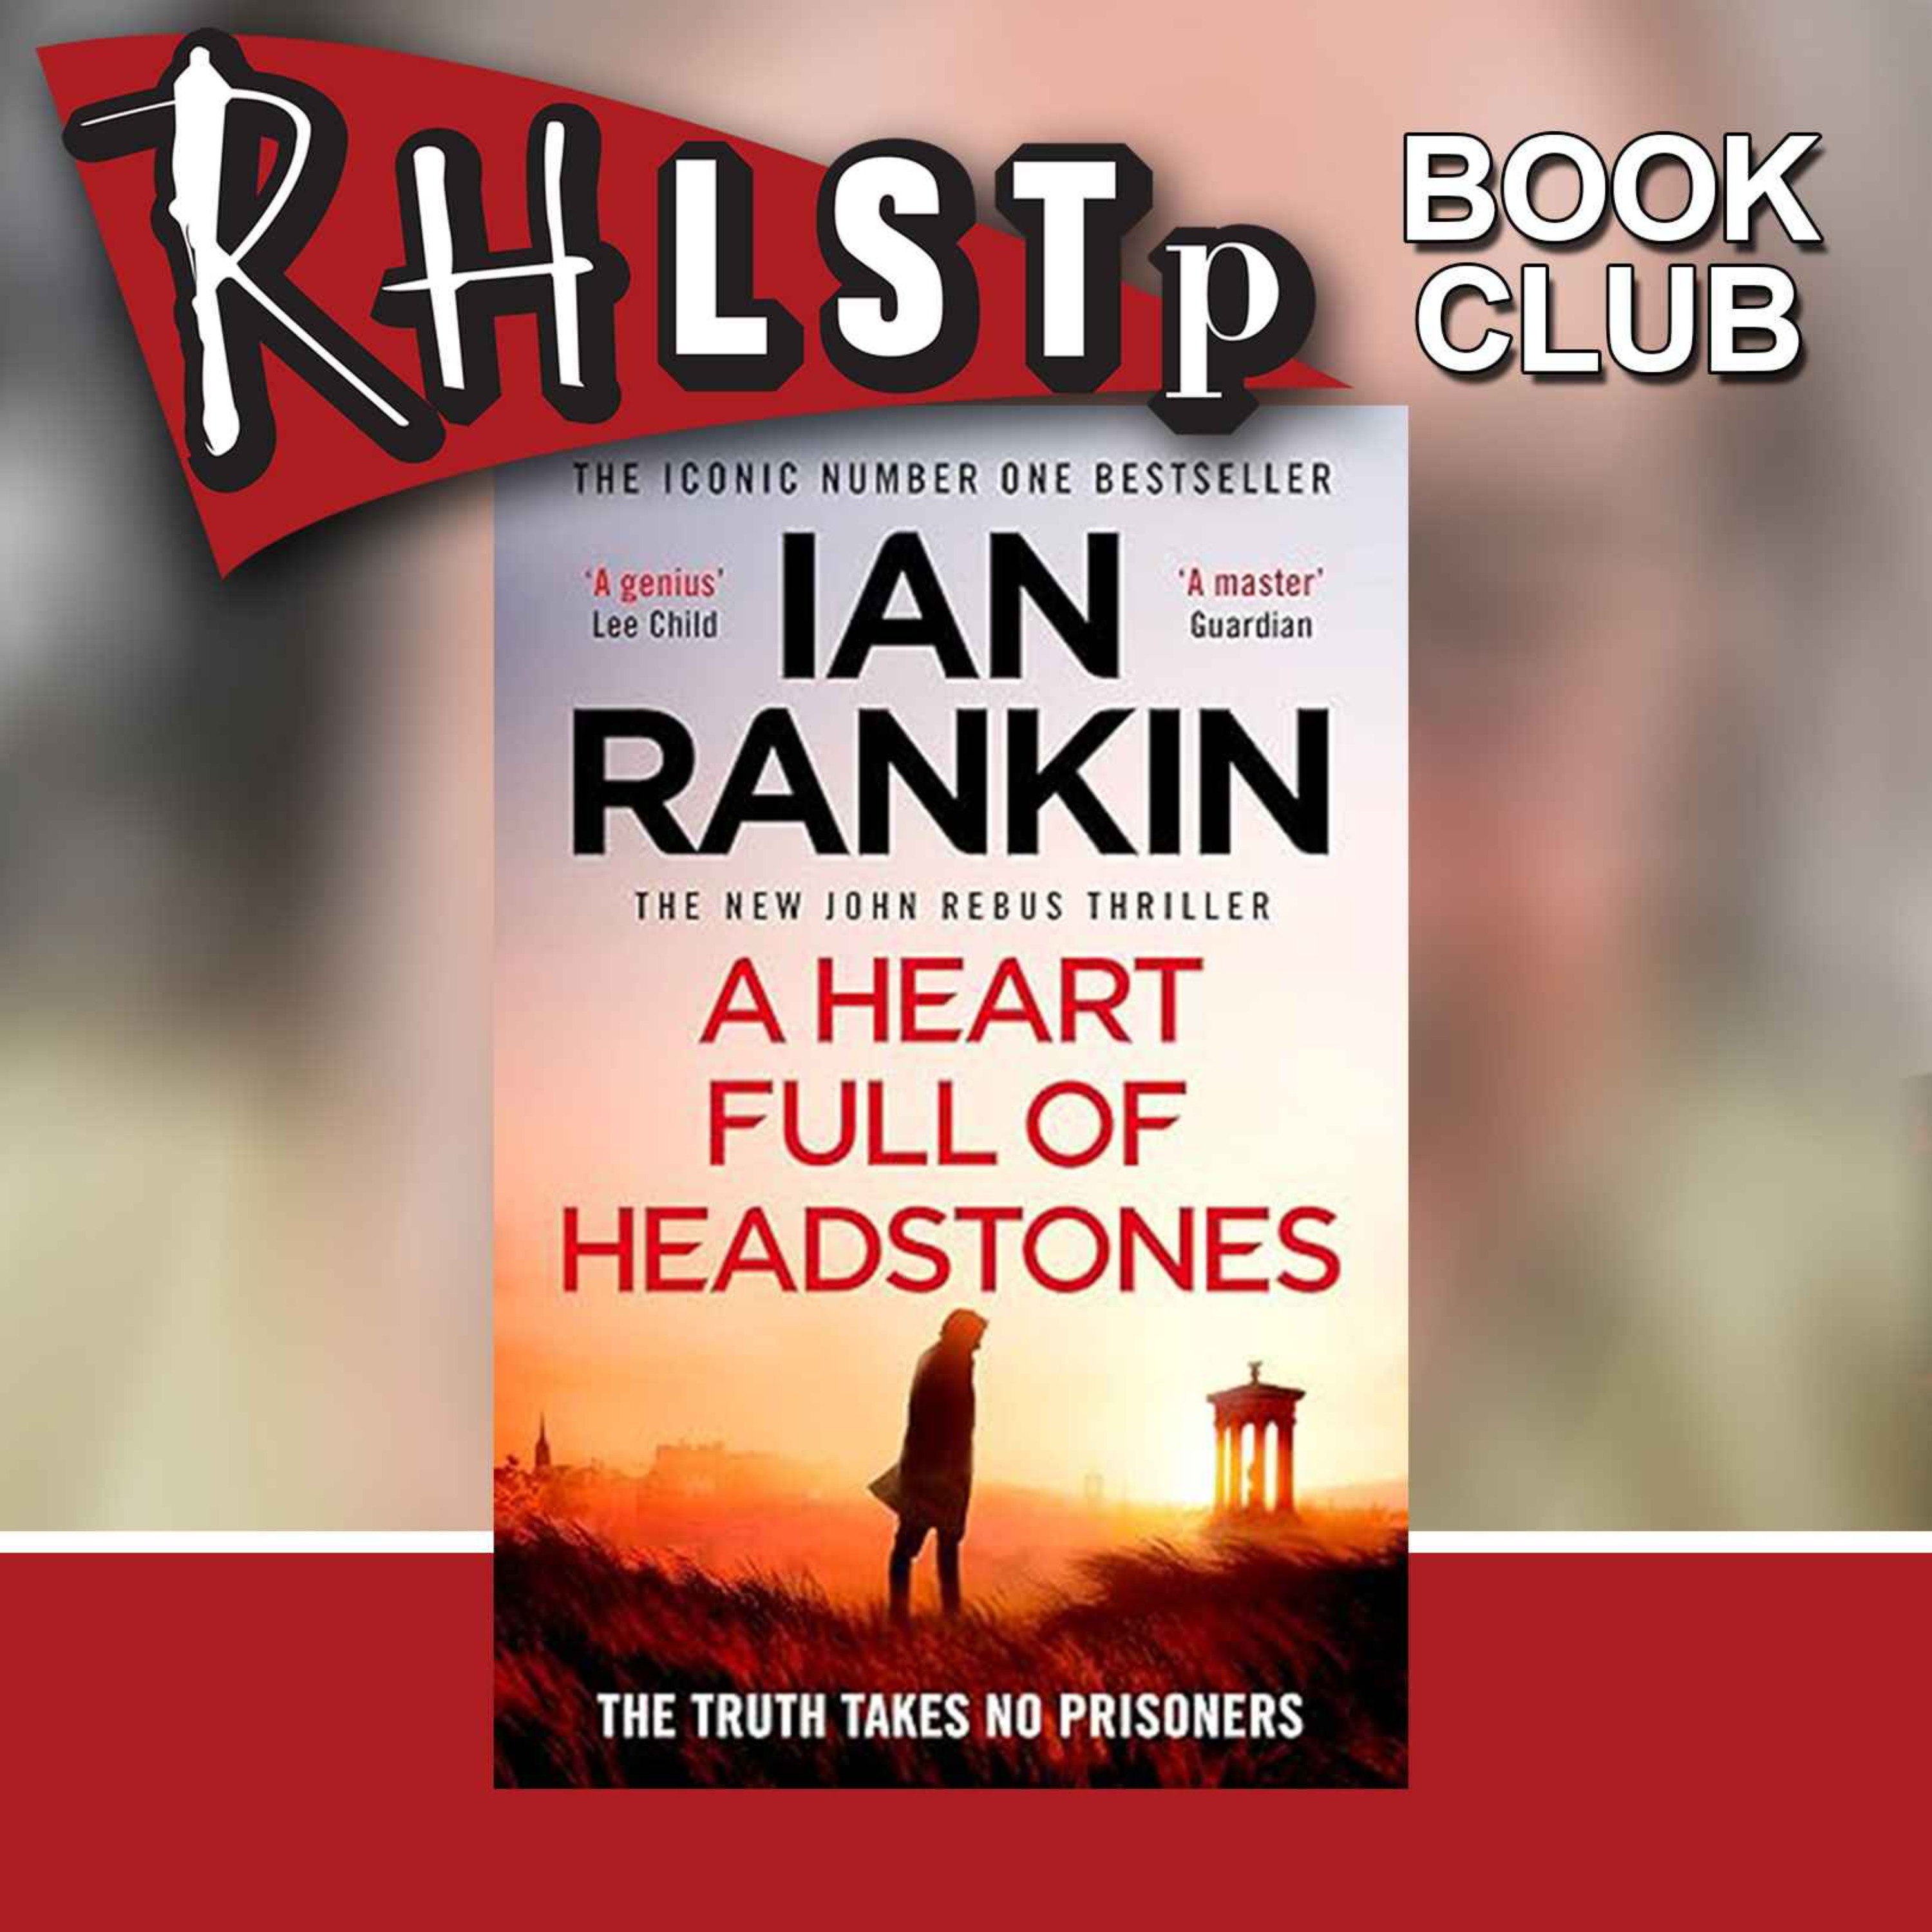 RHLSTP Book Club 81 - Ian Rankin